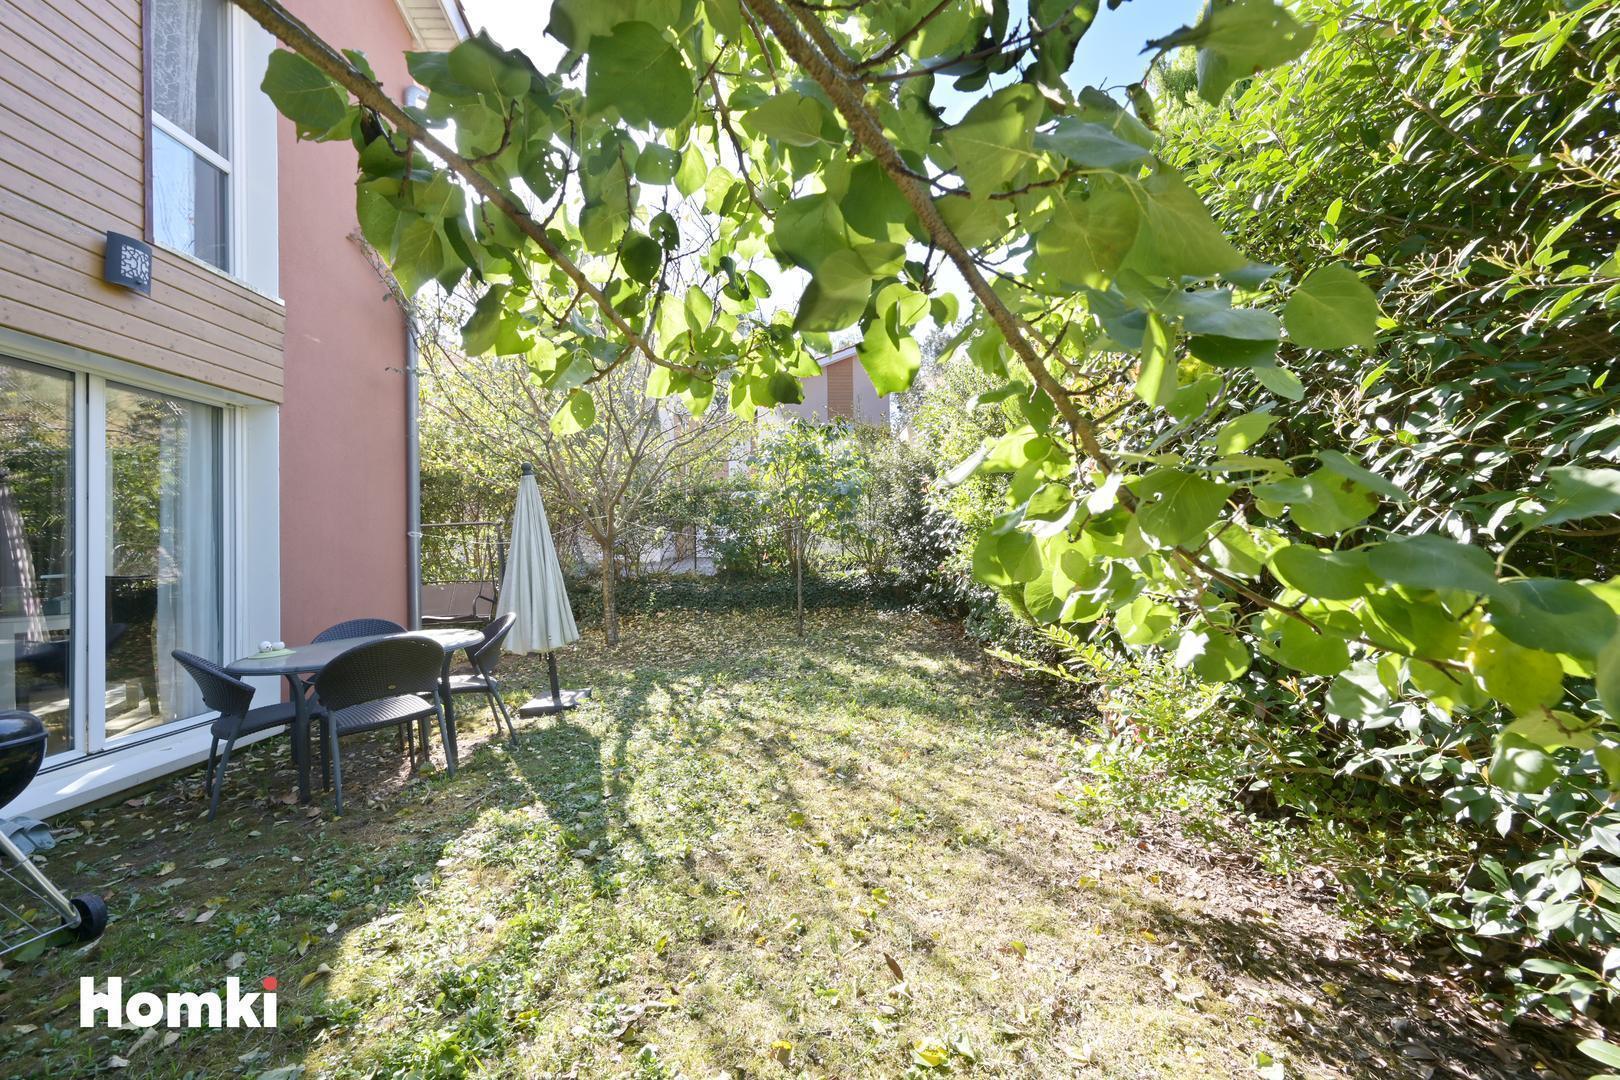 Homki - Vente Maison/villa  de 94.0 m² à Bourgoin-Jallieu 38300